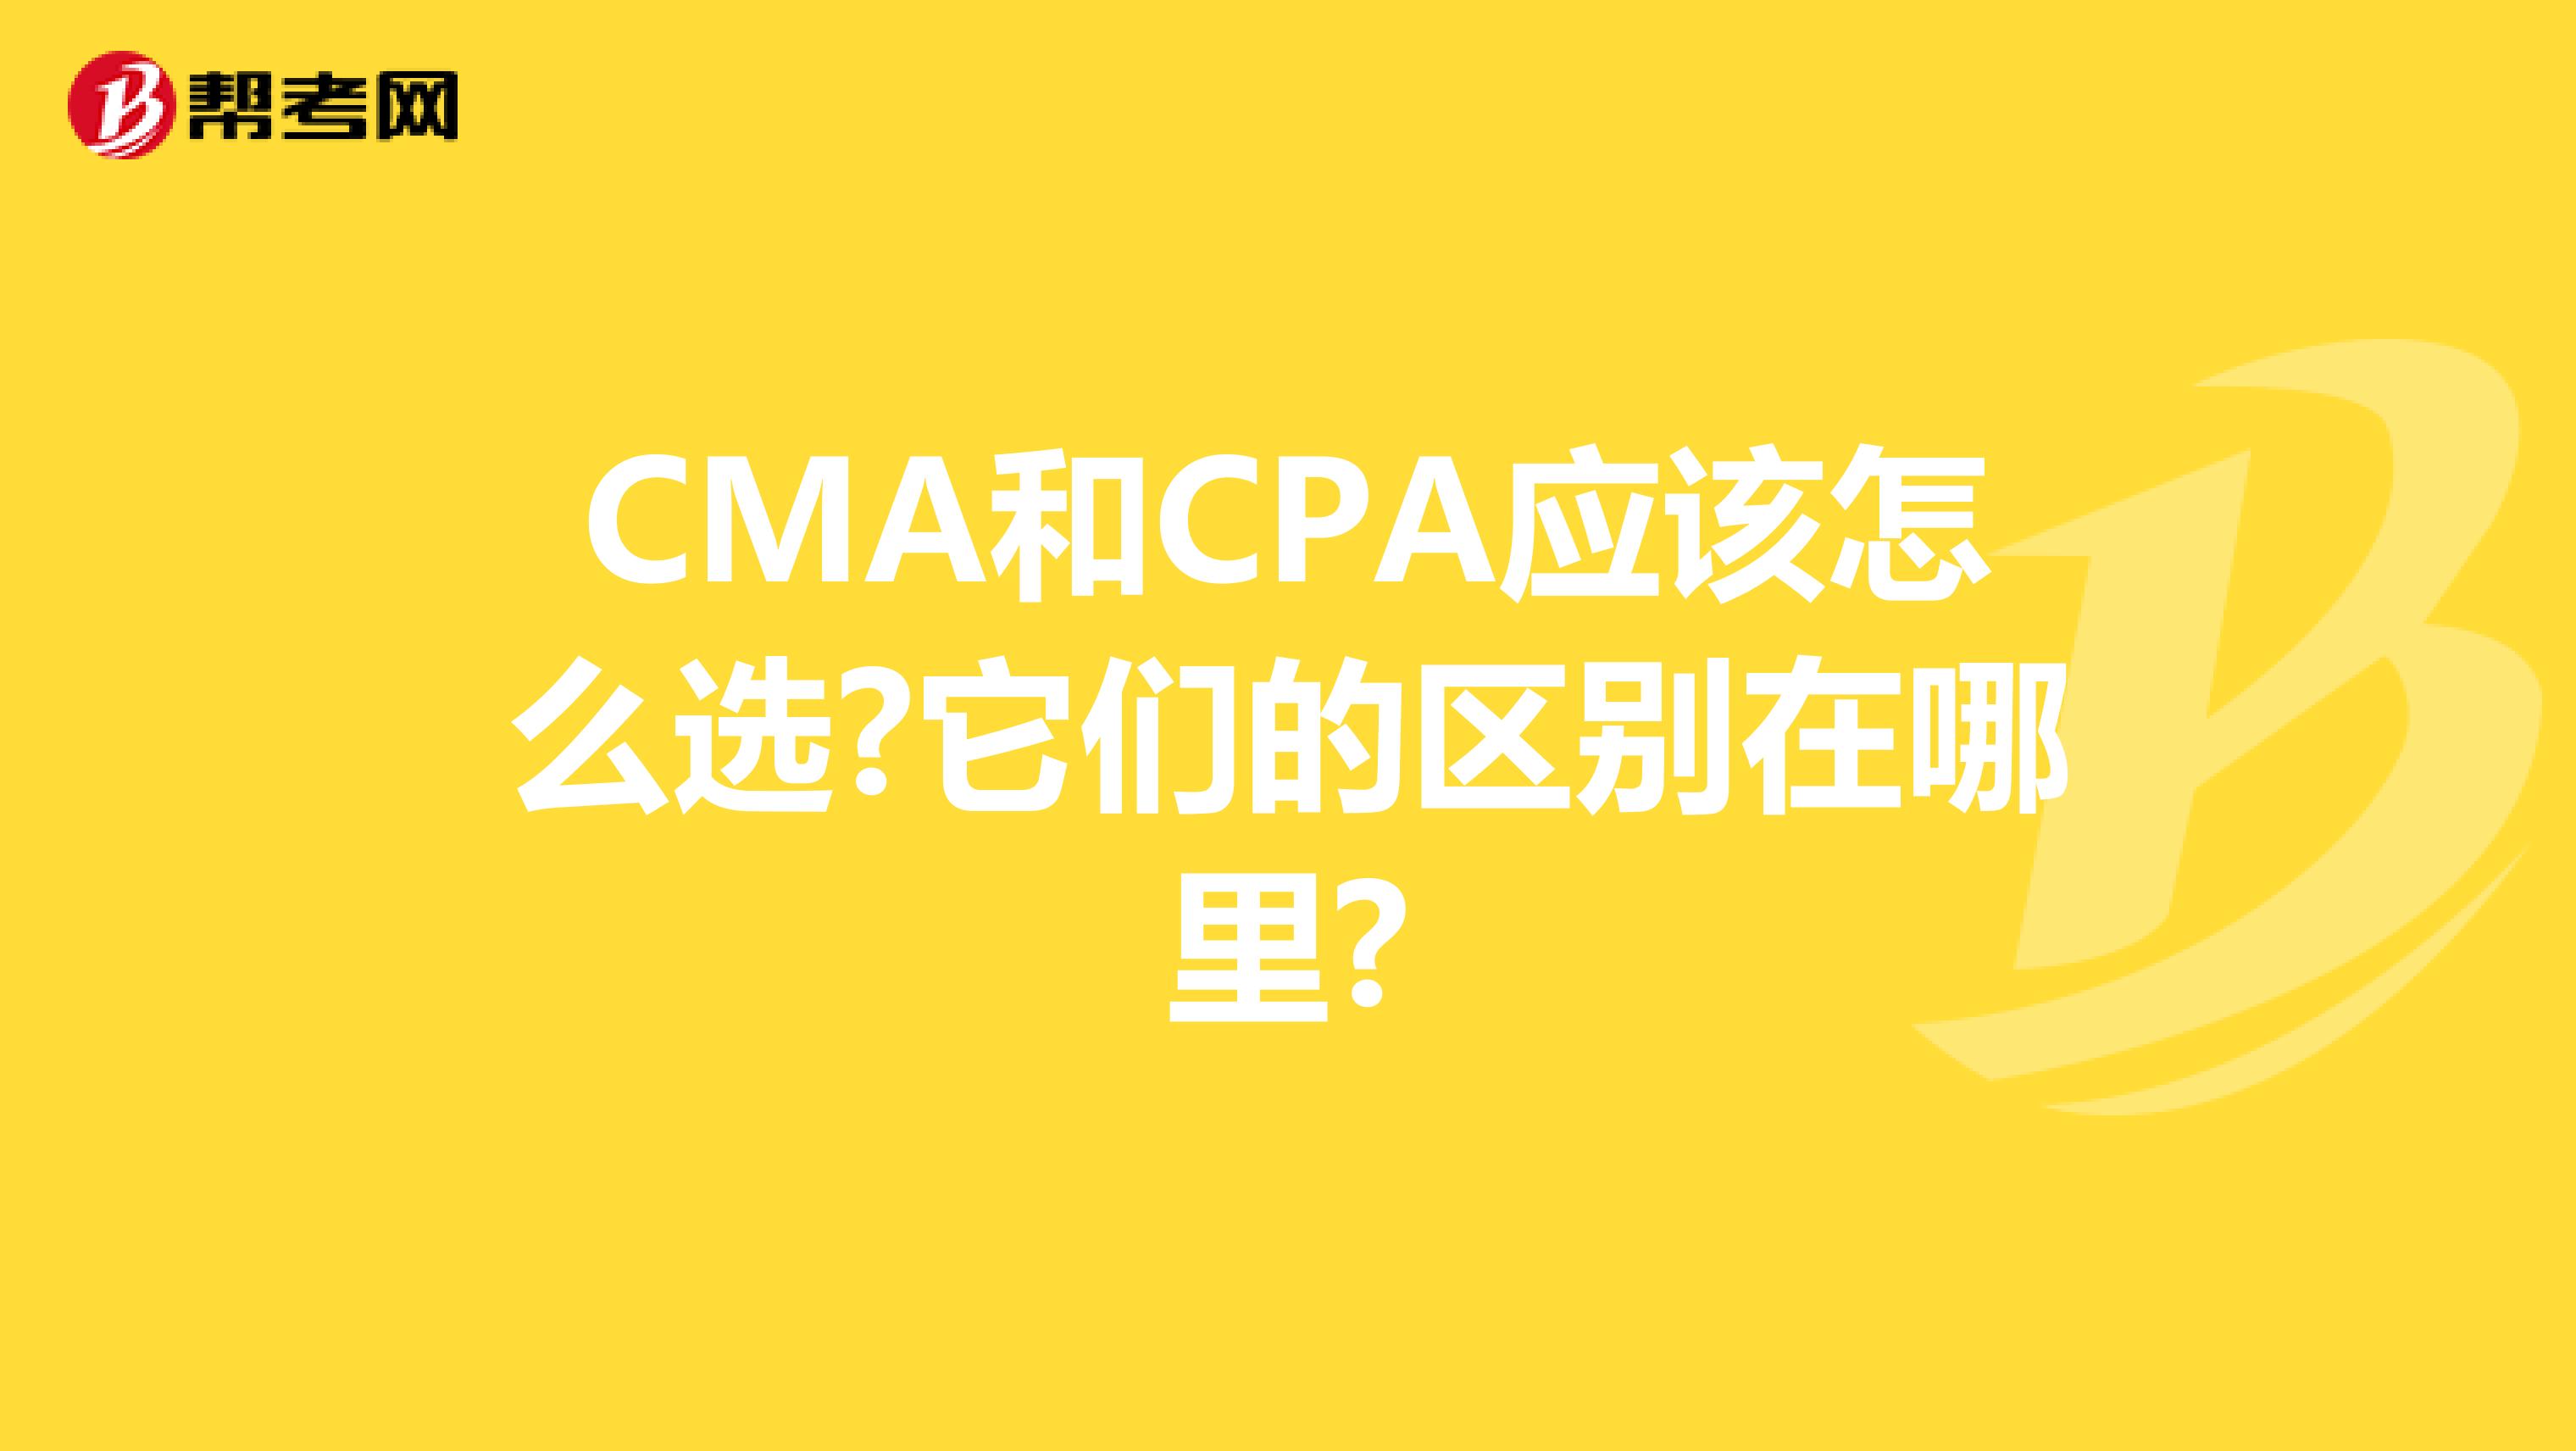 CMA和CPA应该怎么选?它们的区别在哪里?